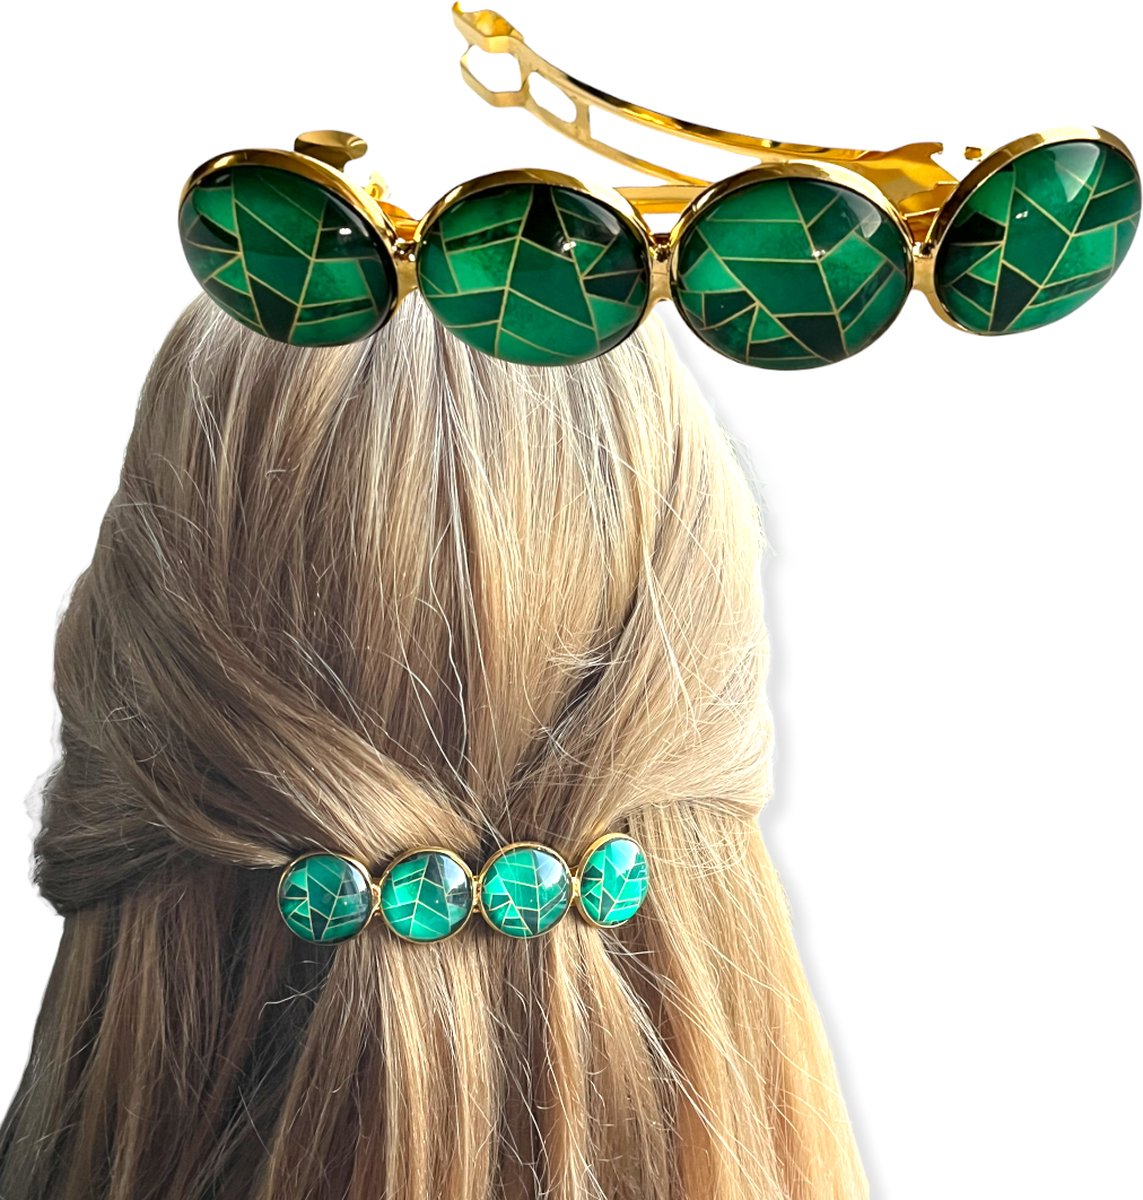 Hairpin.nu Color Hairclip XL haarspeld haarmode goud groen